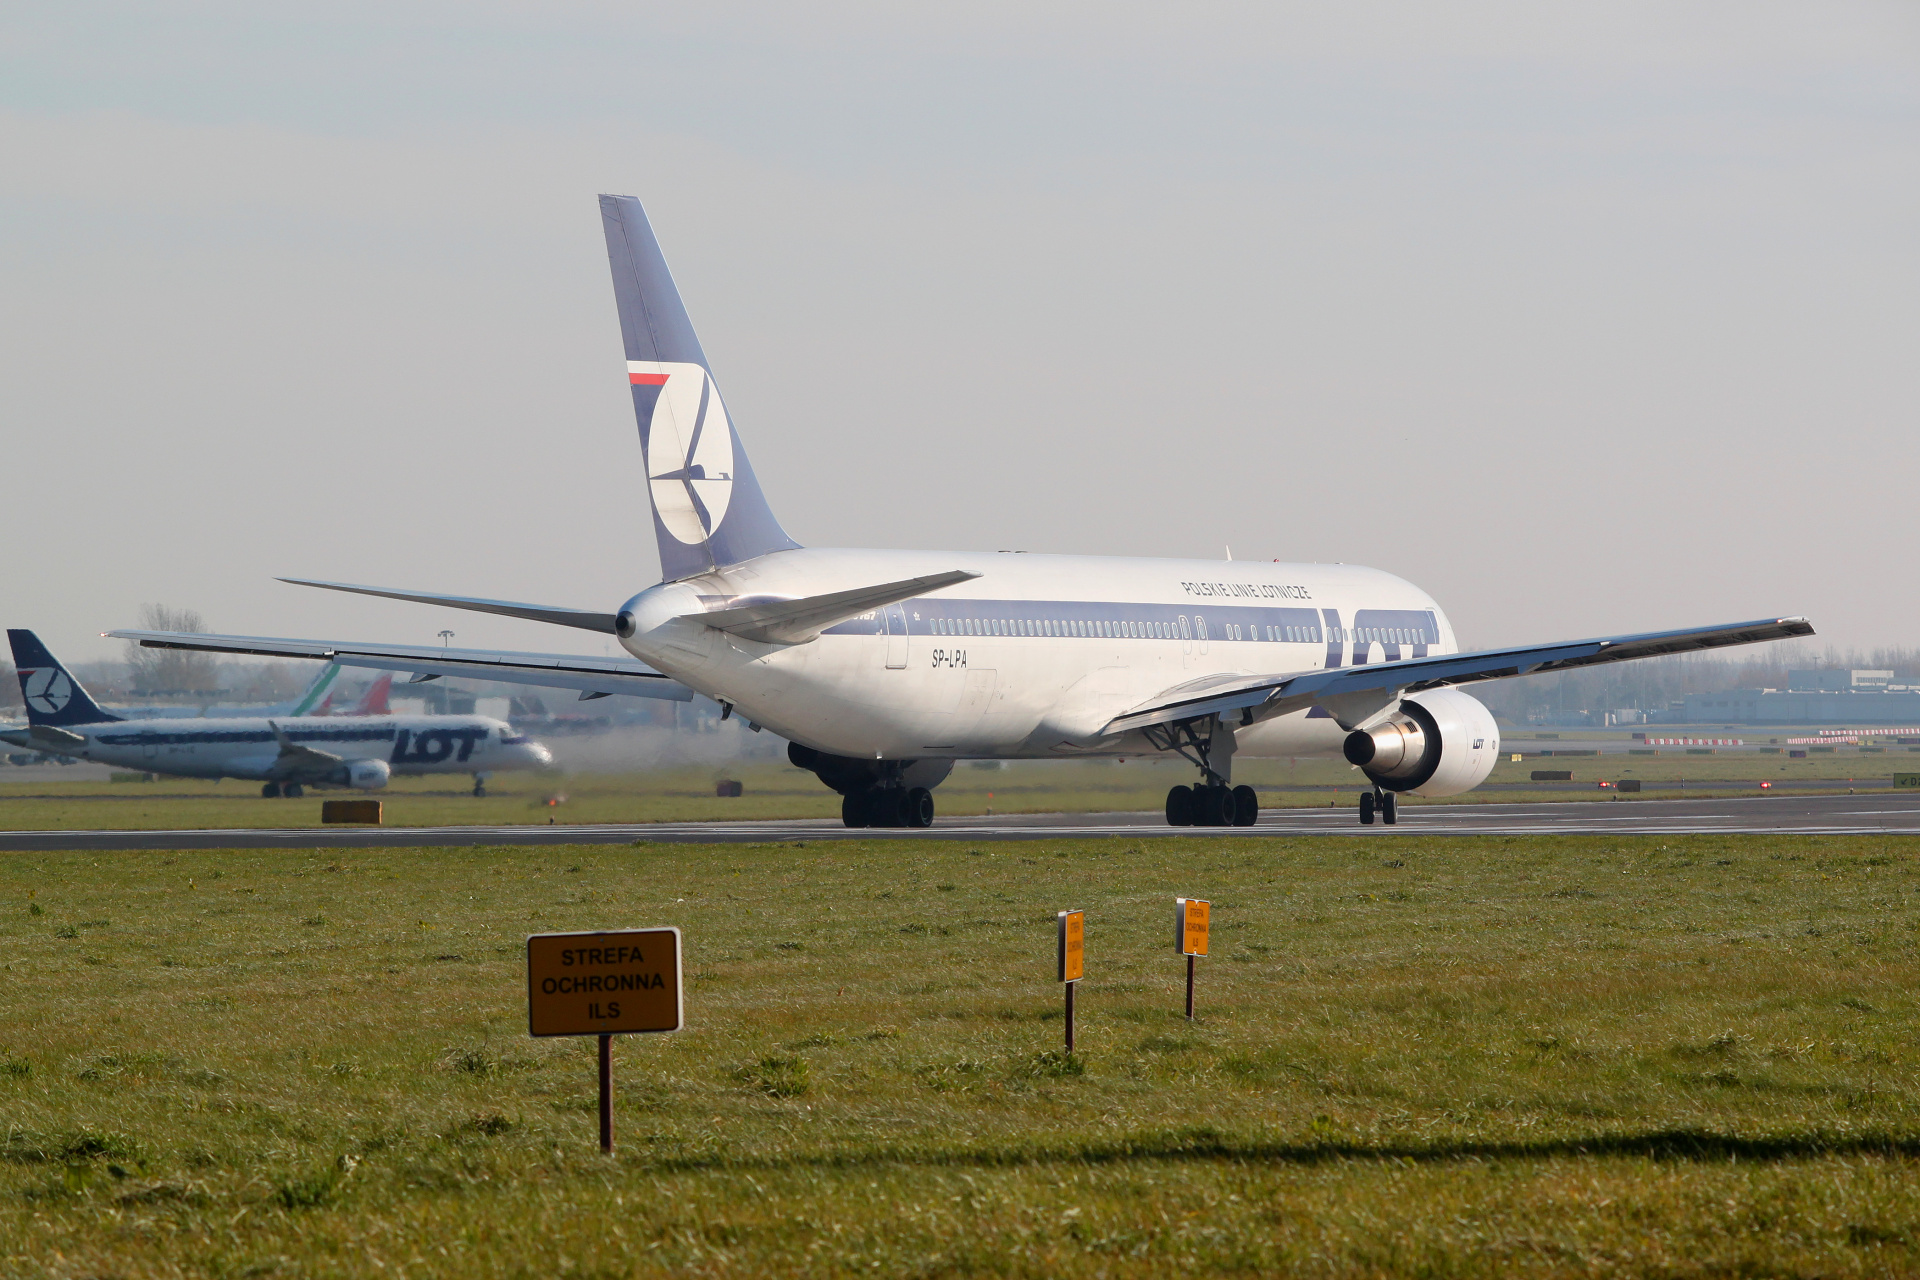 SP-LPA (Aircraft » EPWA Spotting » Boeing 767-300 » LOT Polish Airlines)